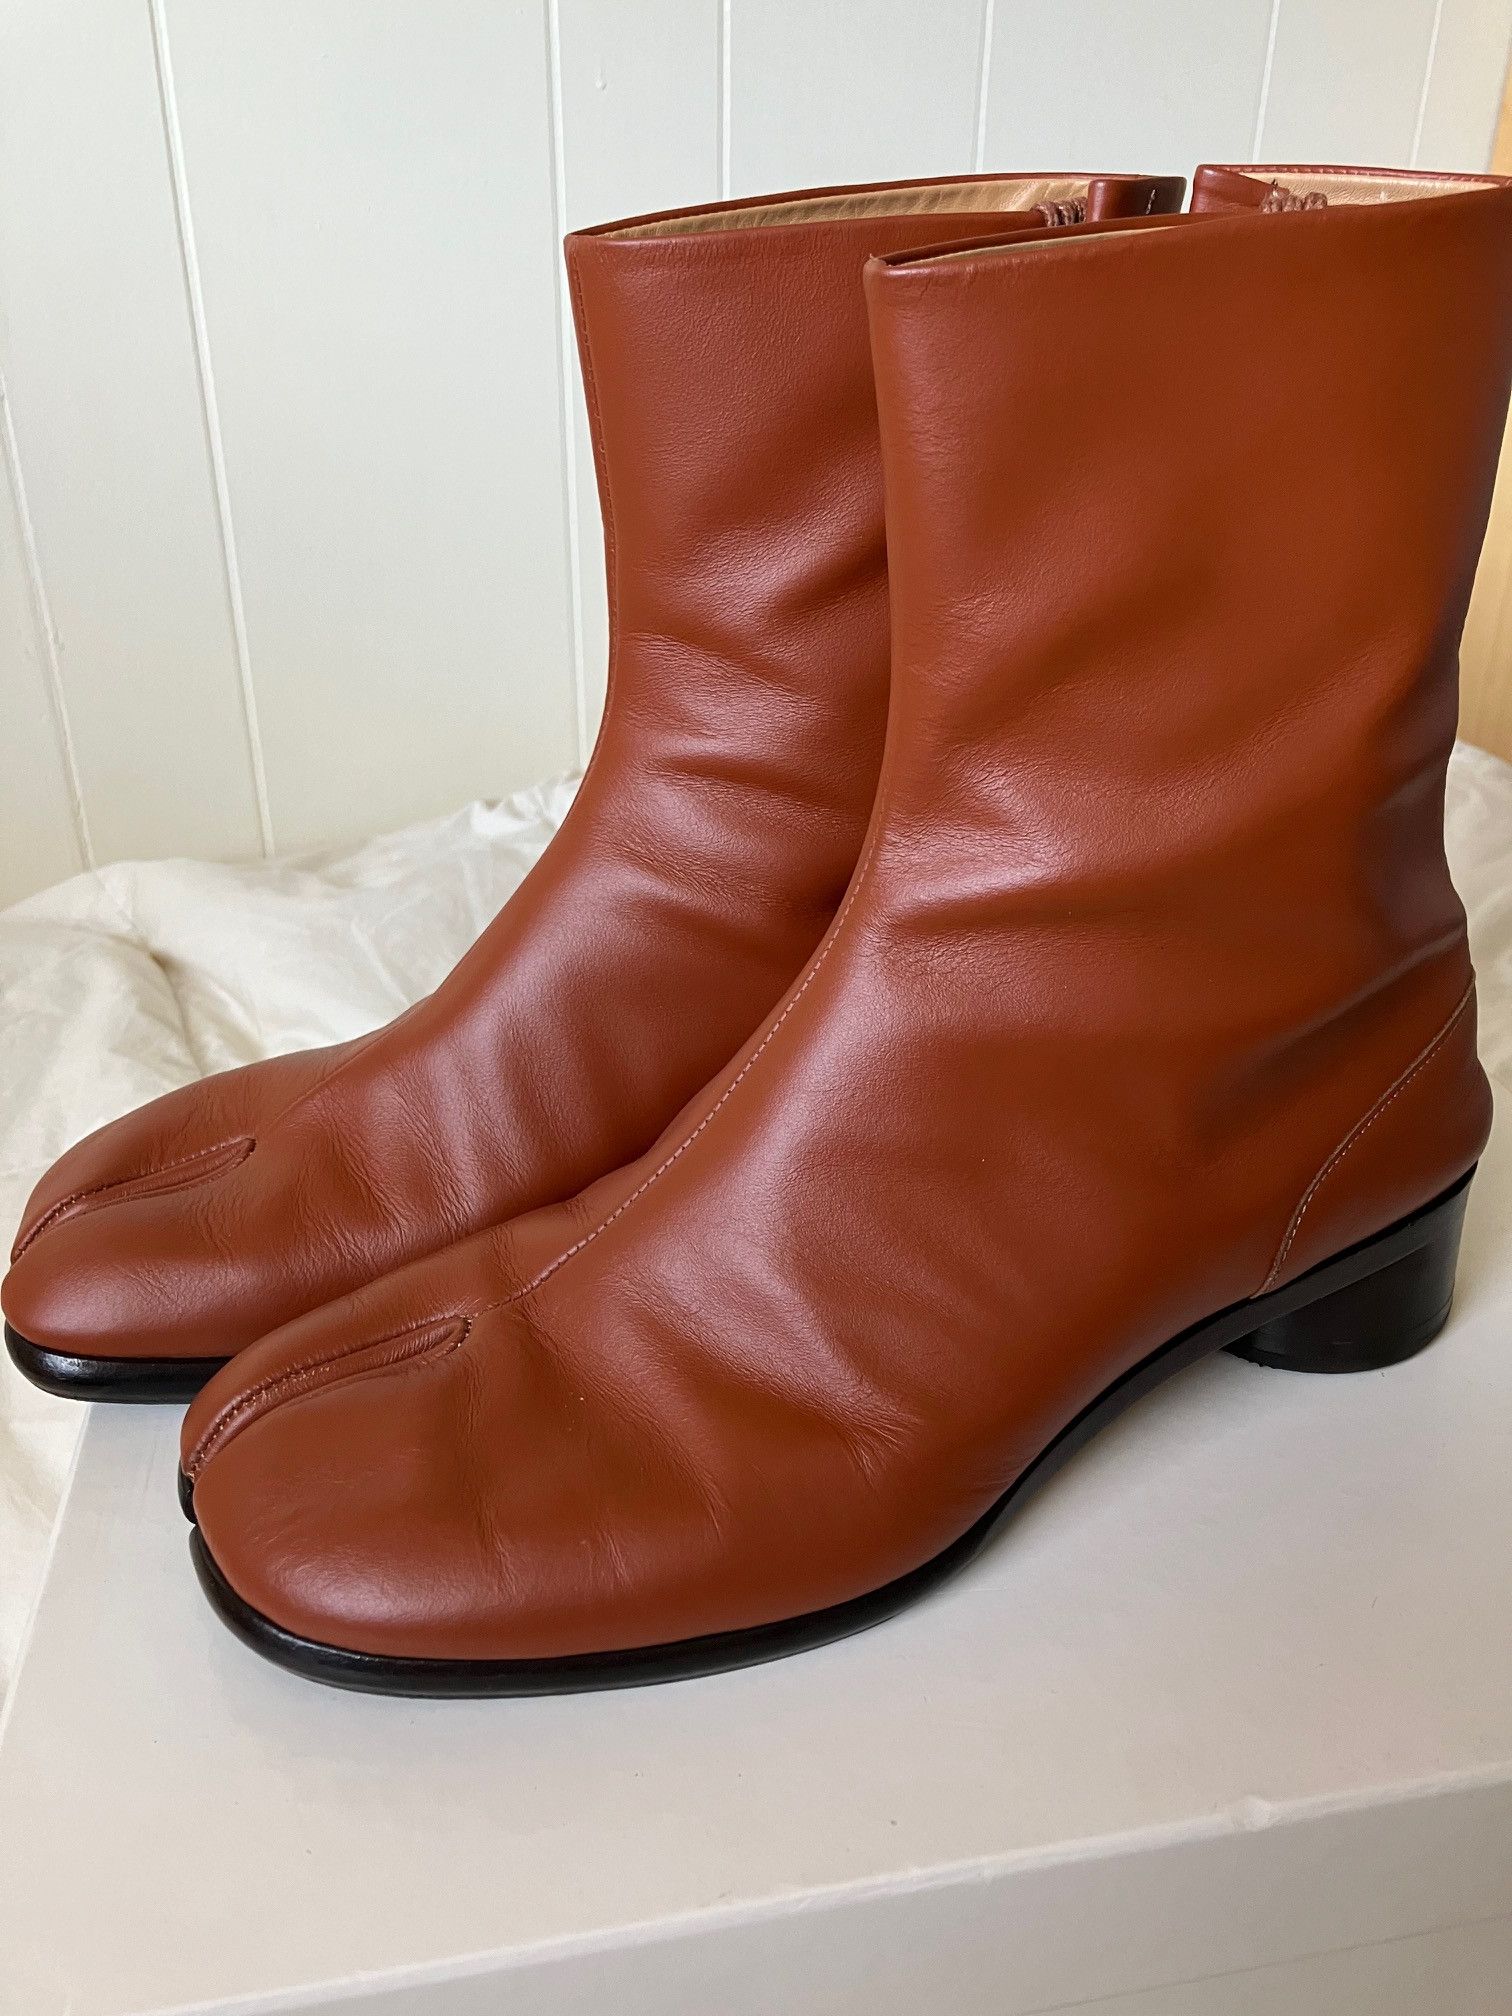 Maison Margiela Tabi Boots Size US 10 / EU 43 - 3 Thumbnail